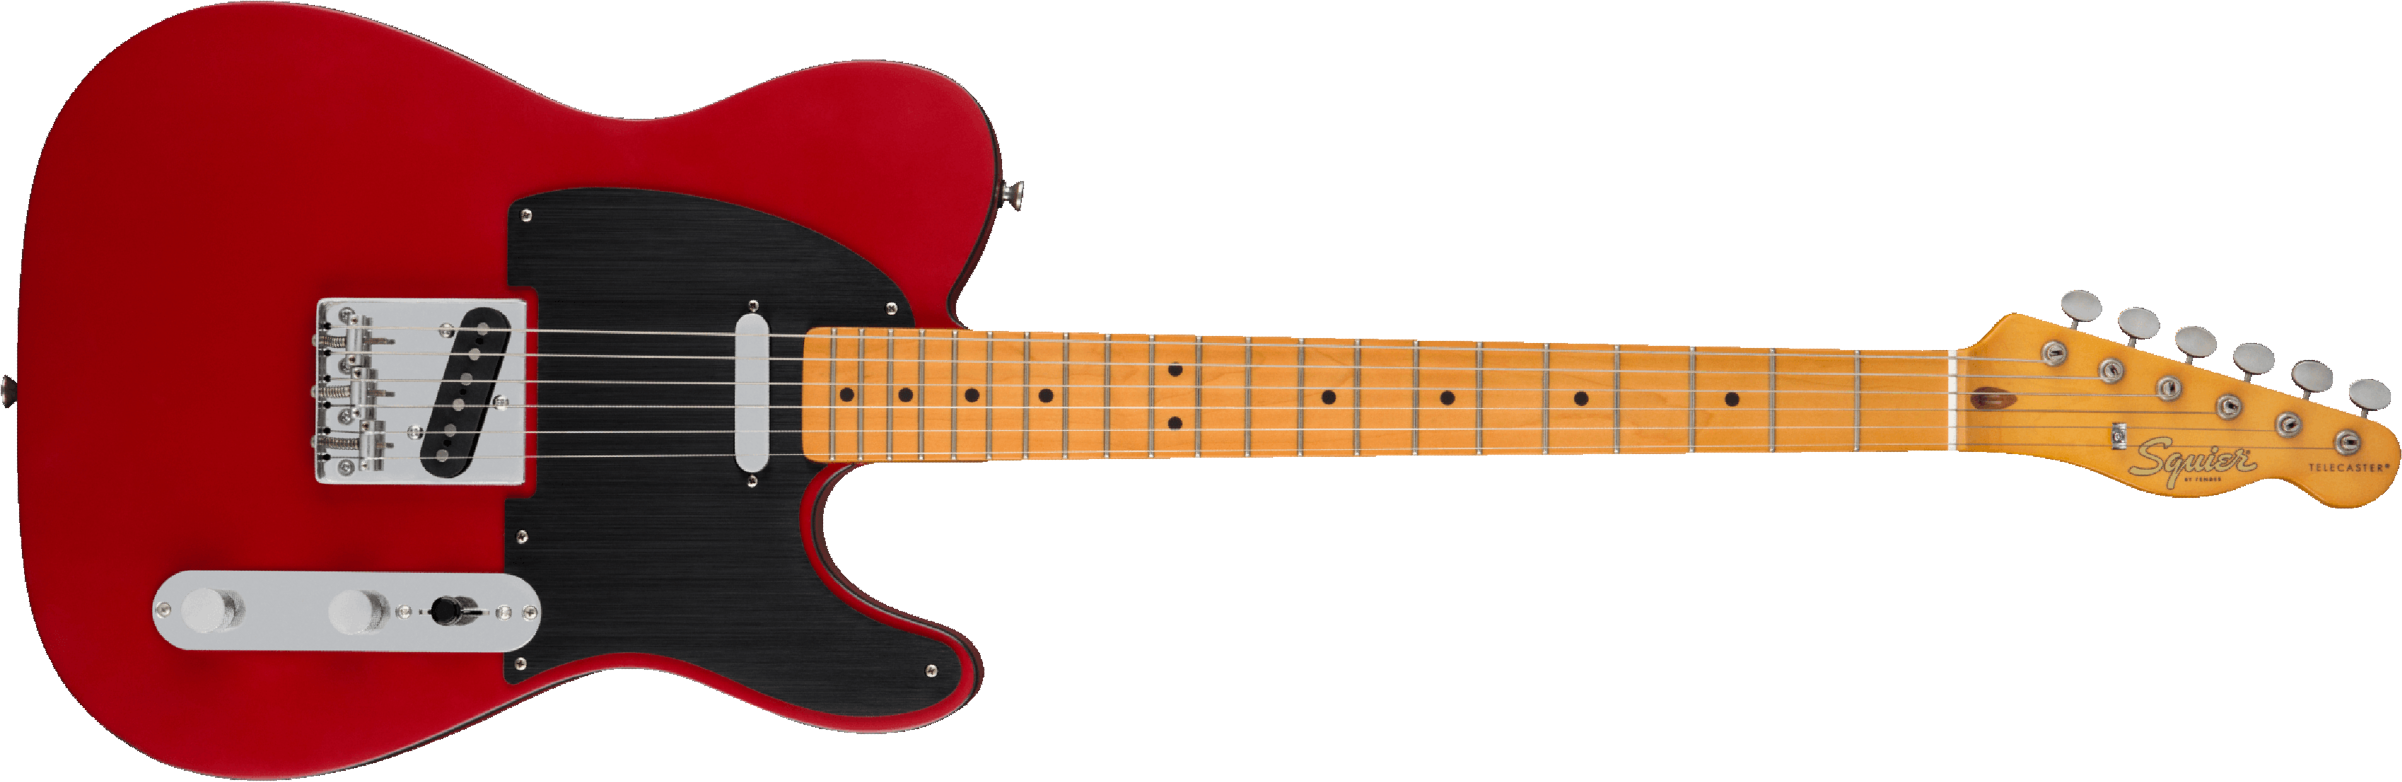 Squier Tele 40th Anniversary Vintage Edition Mn - Satin Dakota Red - Tel shape electric guitar - Main picture